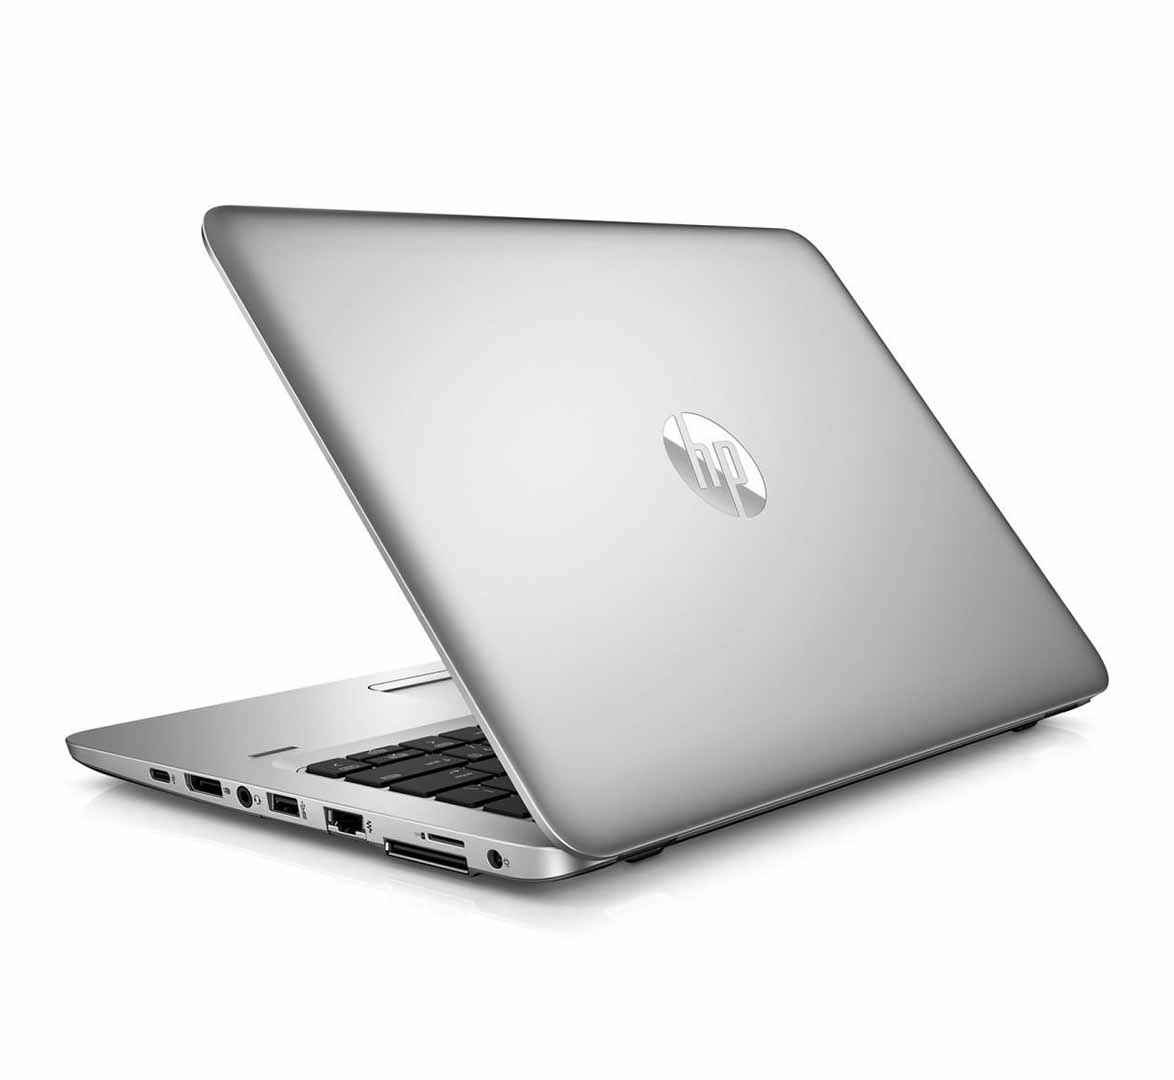 HP EliteBook 725 G3, AMD A10 Series CPU, 8GB RAM, 256GB SSD, 12.5 inch Touchscreen, Win 10 Pro, Refurbished Laptop